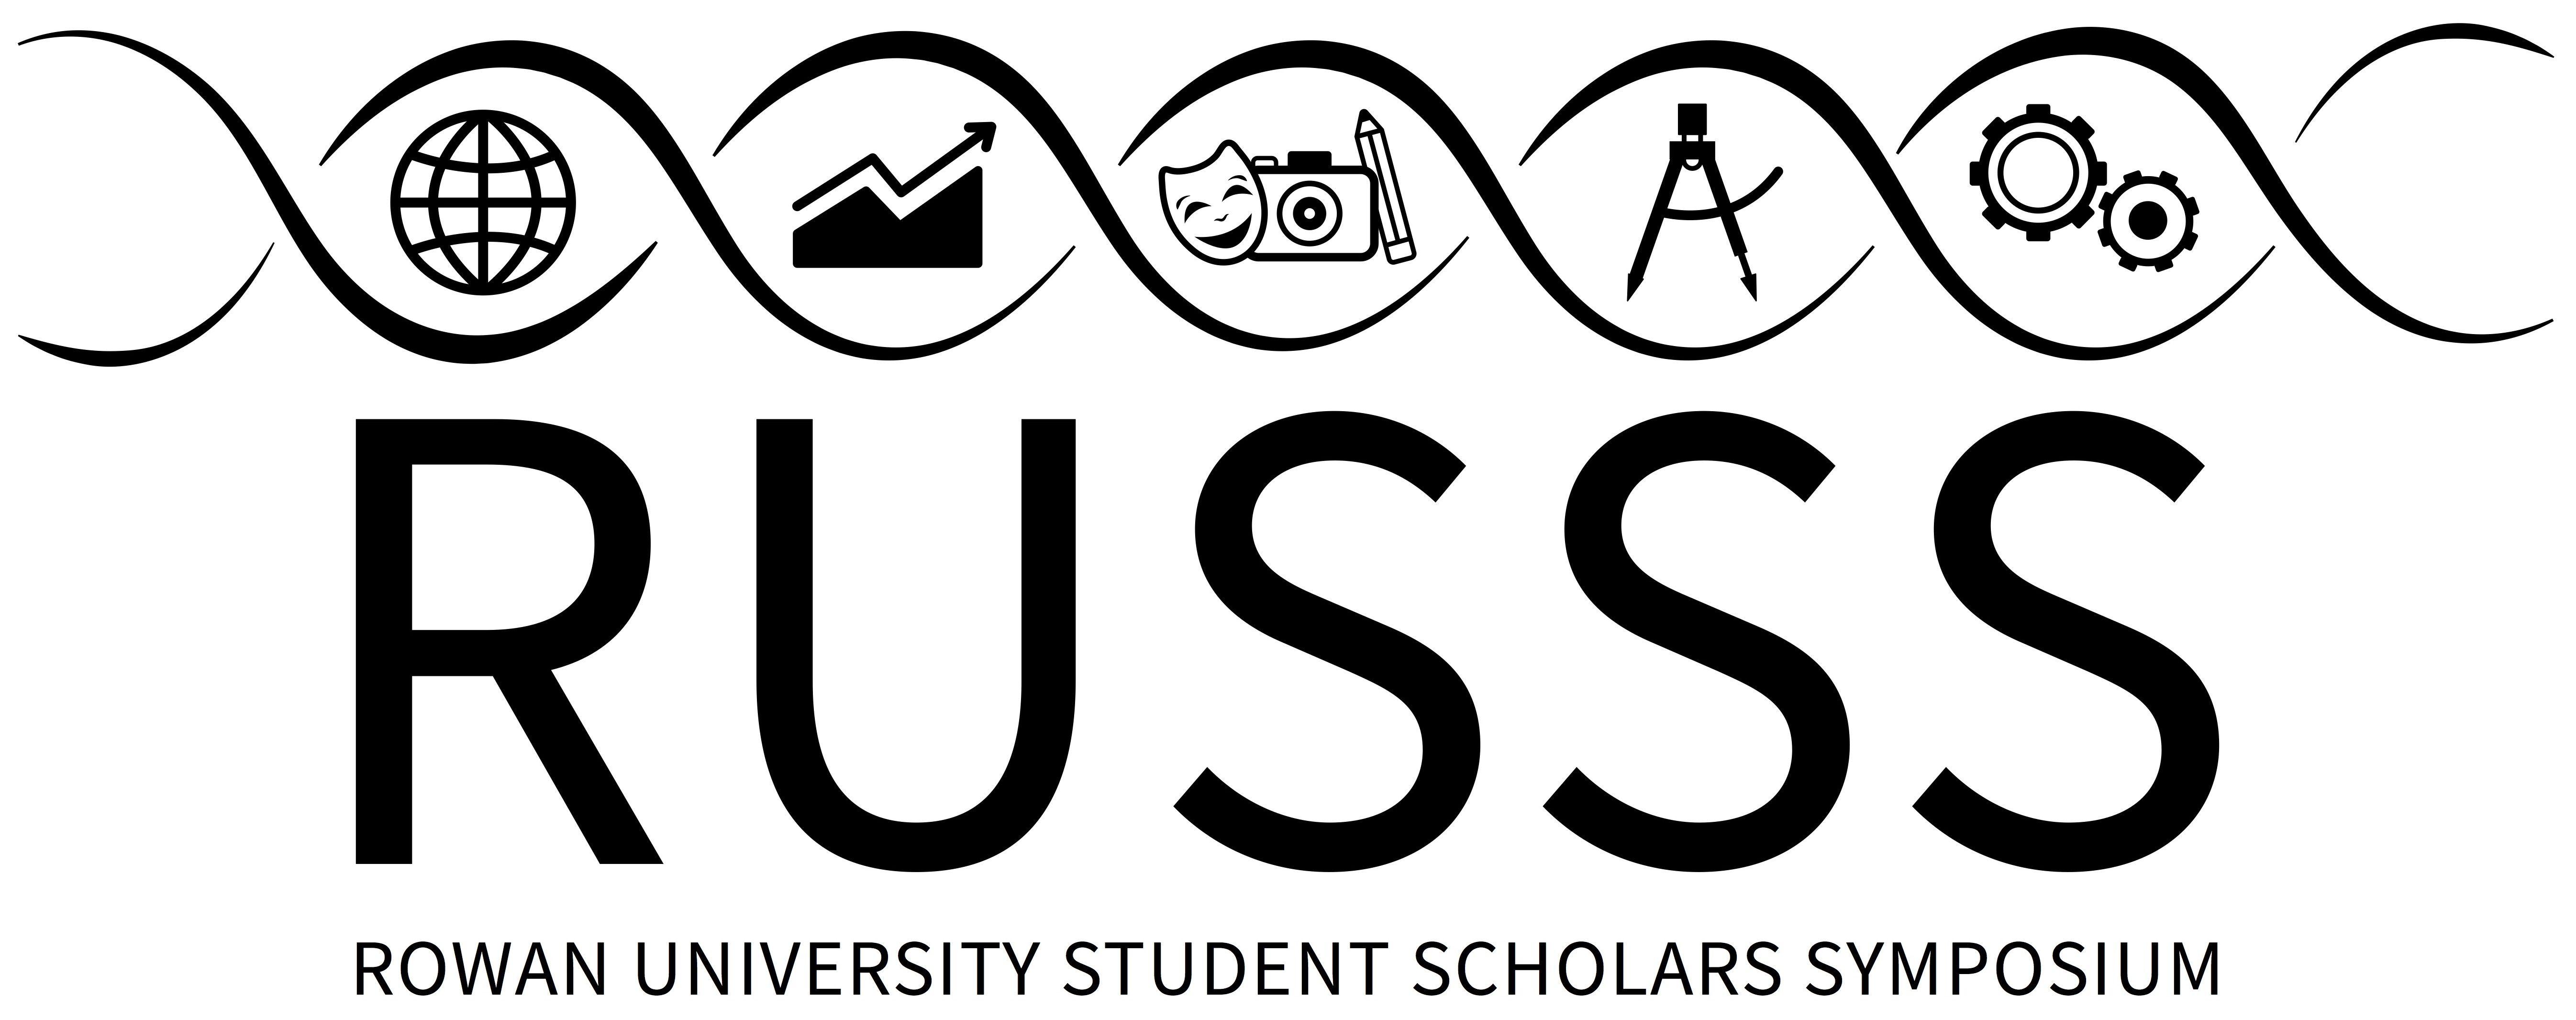 Rowan U Logo - Rowan University Student Scholars Symposium | College of Science and ...